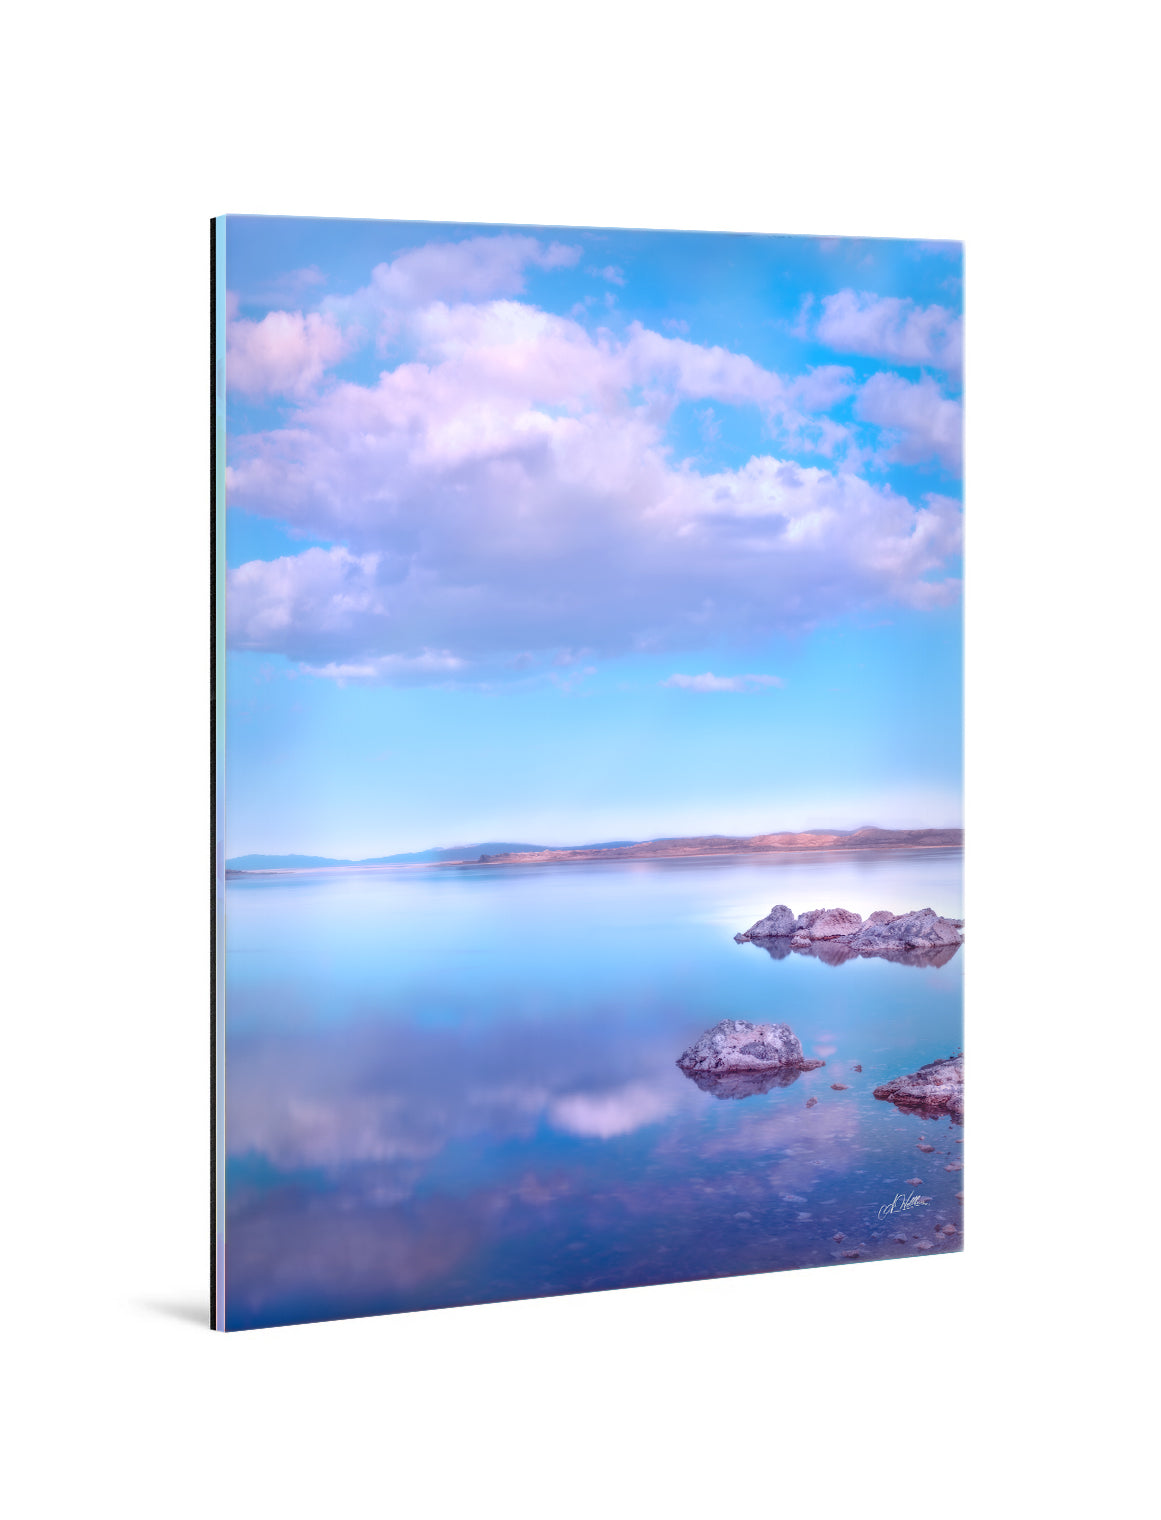 Fine Art Photography |  Limited-Edition Museum-Quality Acrylic Print | "Skyline"